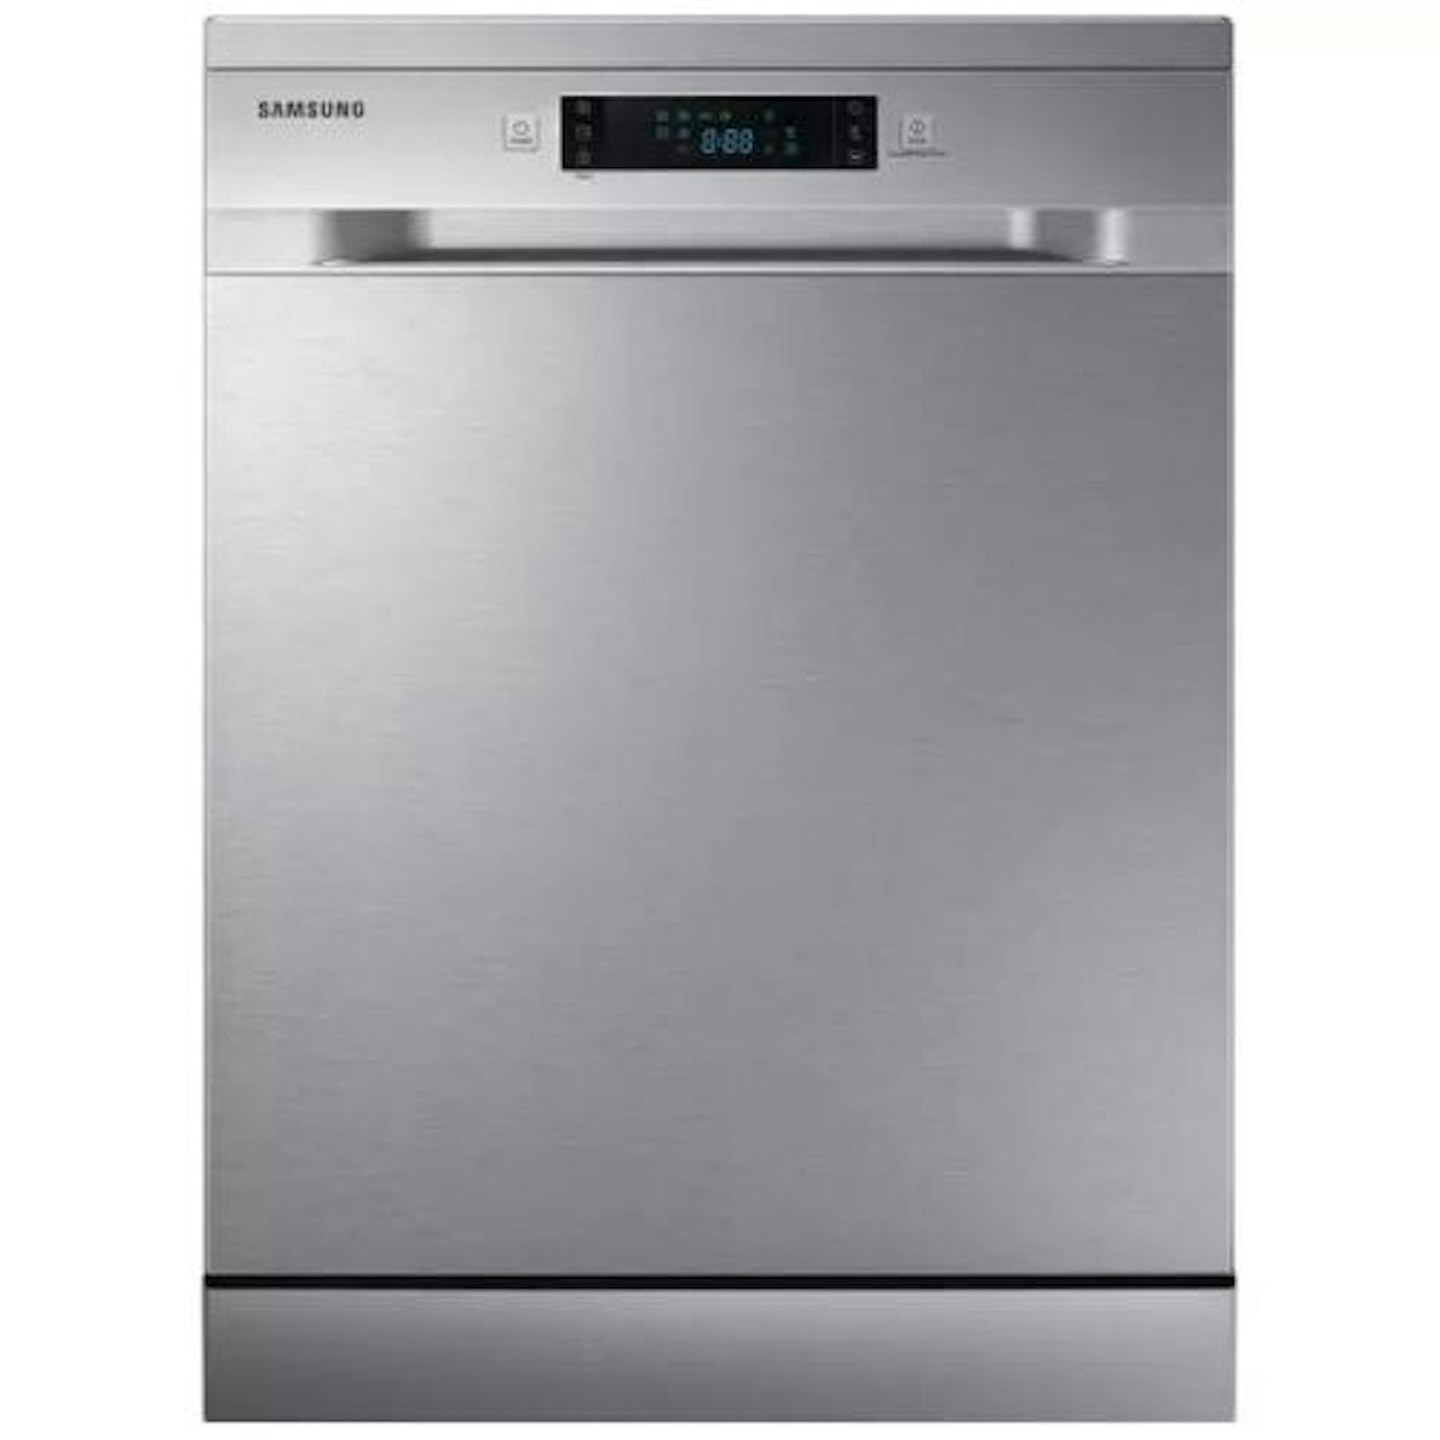 SAMSUNG DW60M5050FSEU Full-size Dishwasher